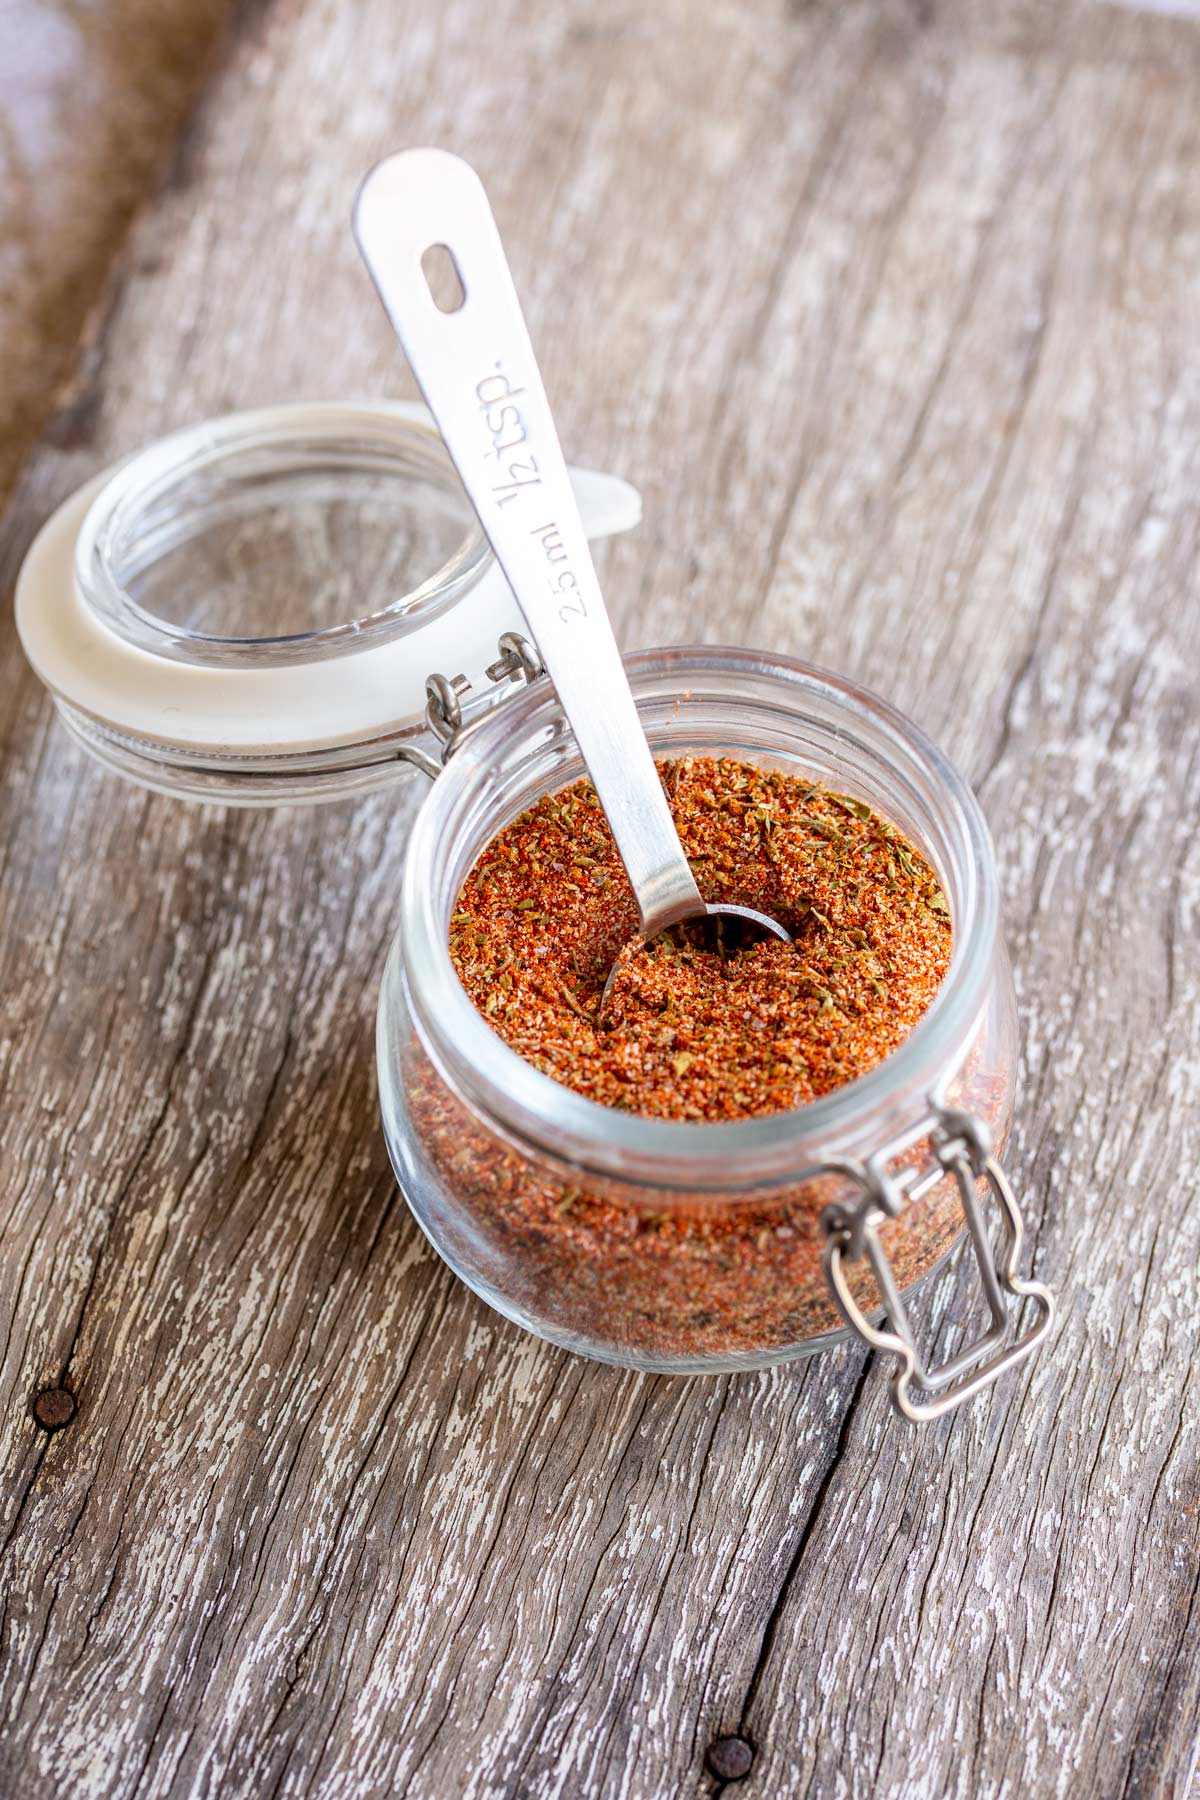 a metal ½ teaspoon sticking out of a glass jar of cajun seasoning blend